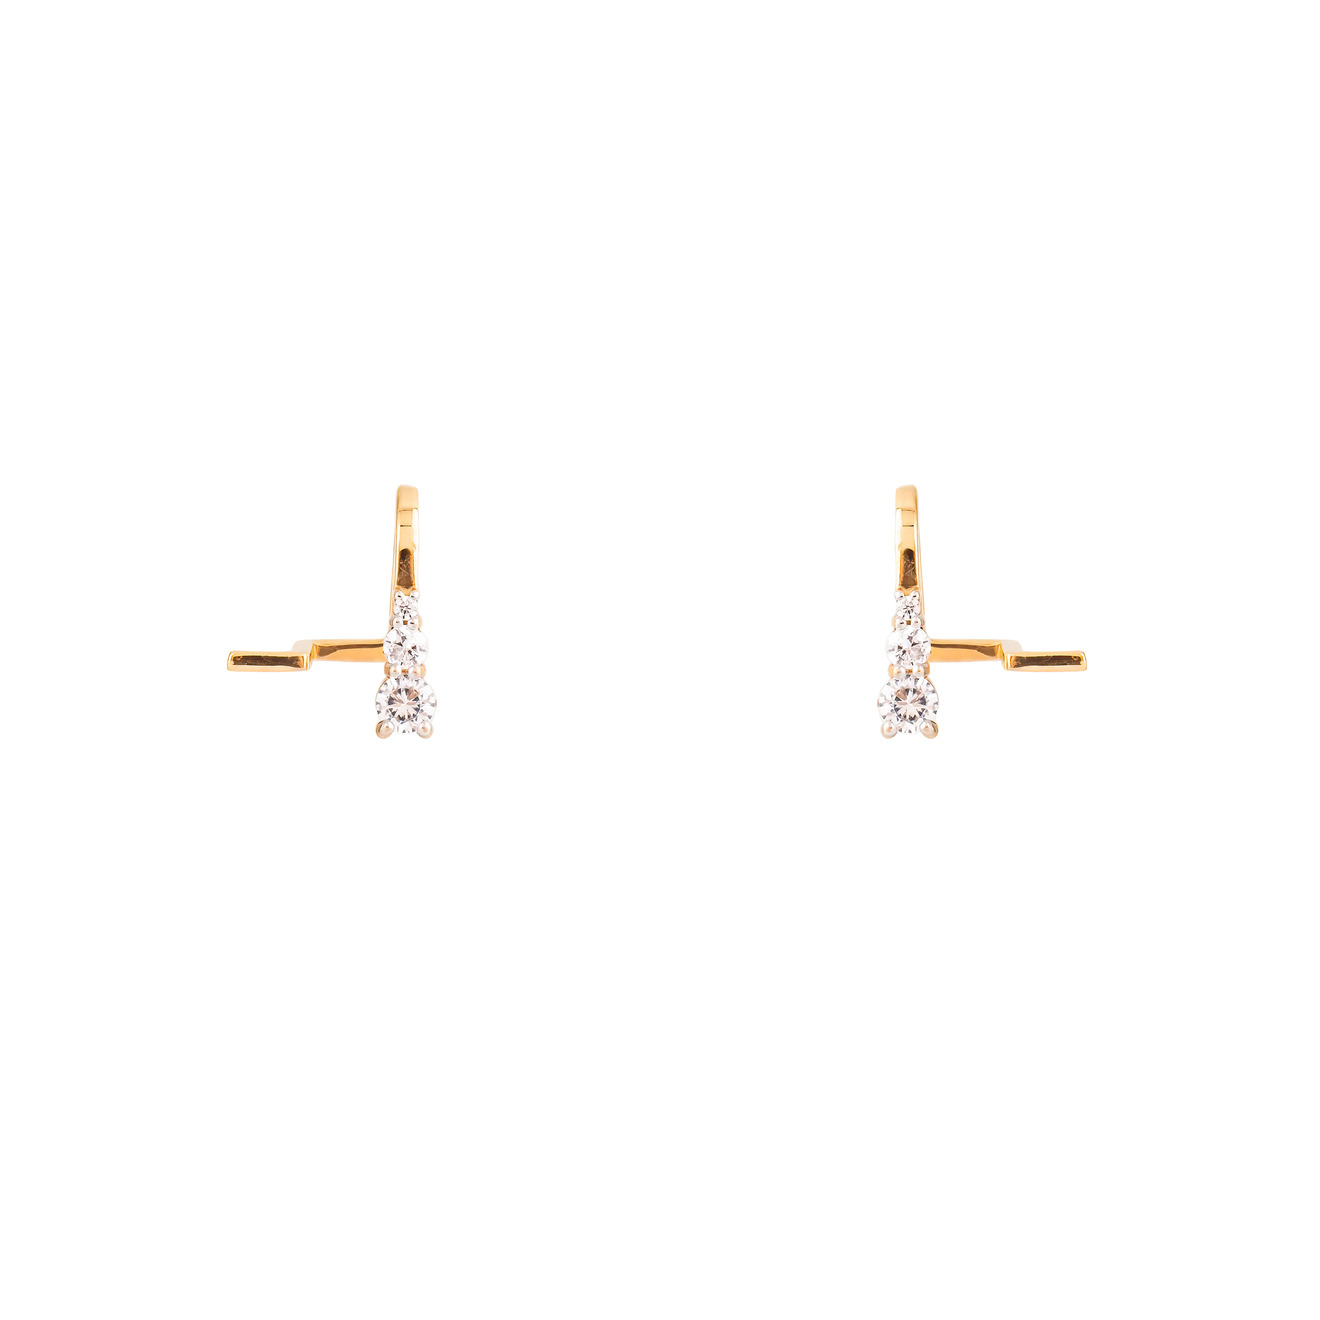 Herald Percy Diamonds Золотые серьги-клаймберы с кристаллами в виде ромба цена и фото